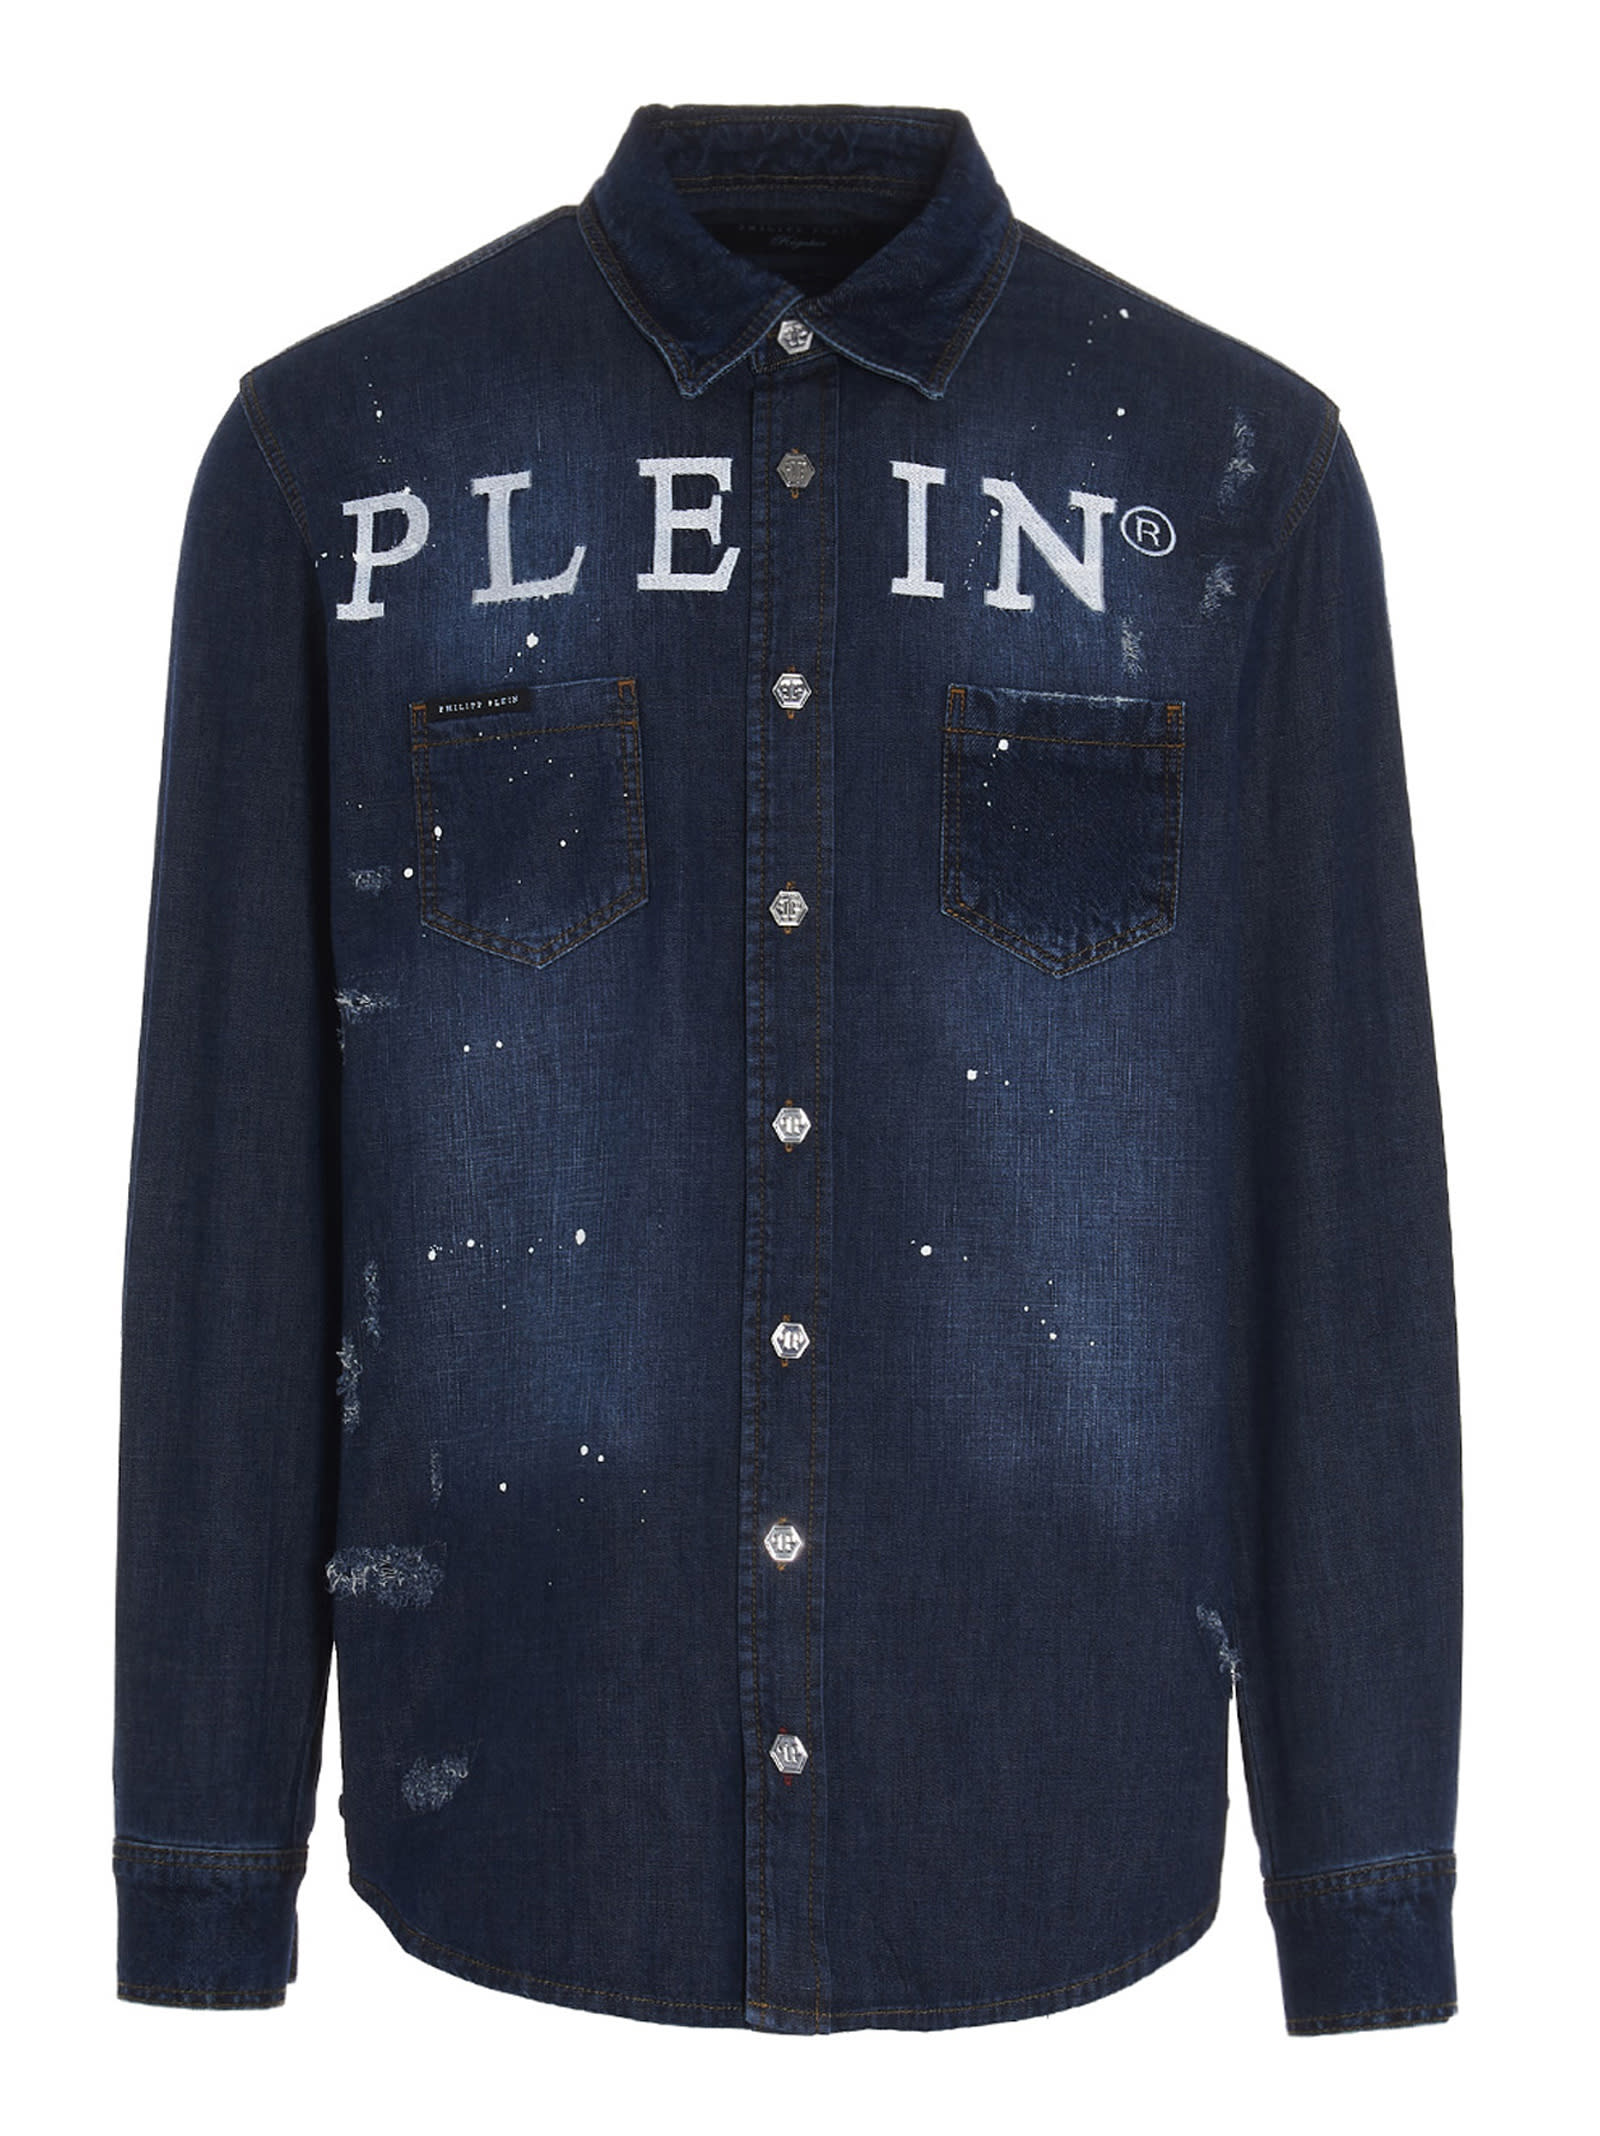 Philipp Plein iconic Plein Shirt